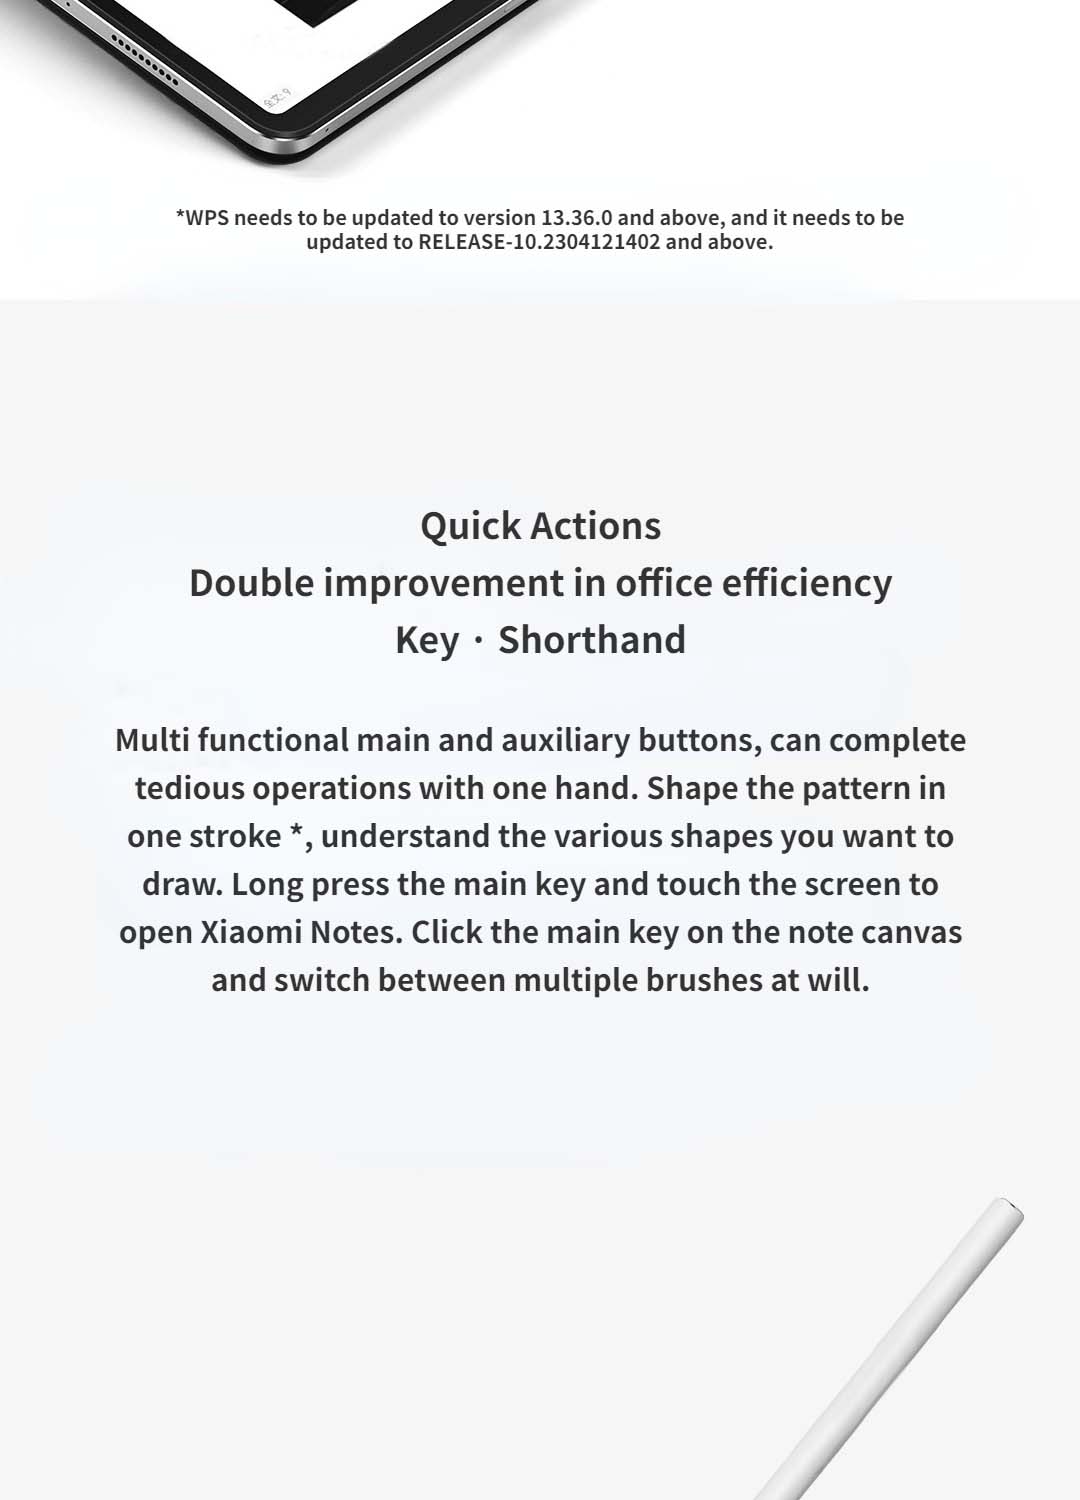 Buy Xiaomi Inspired Stylus Touch Pen 2nd Gen - Giztop